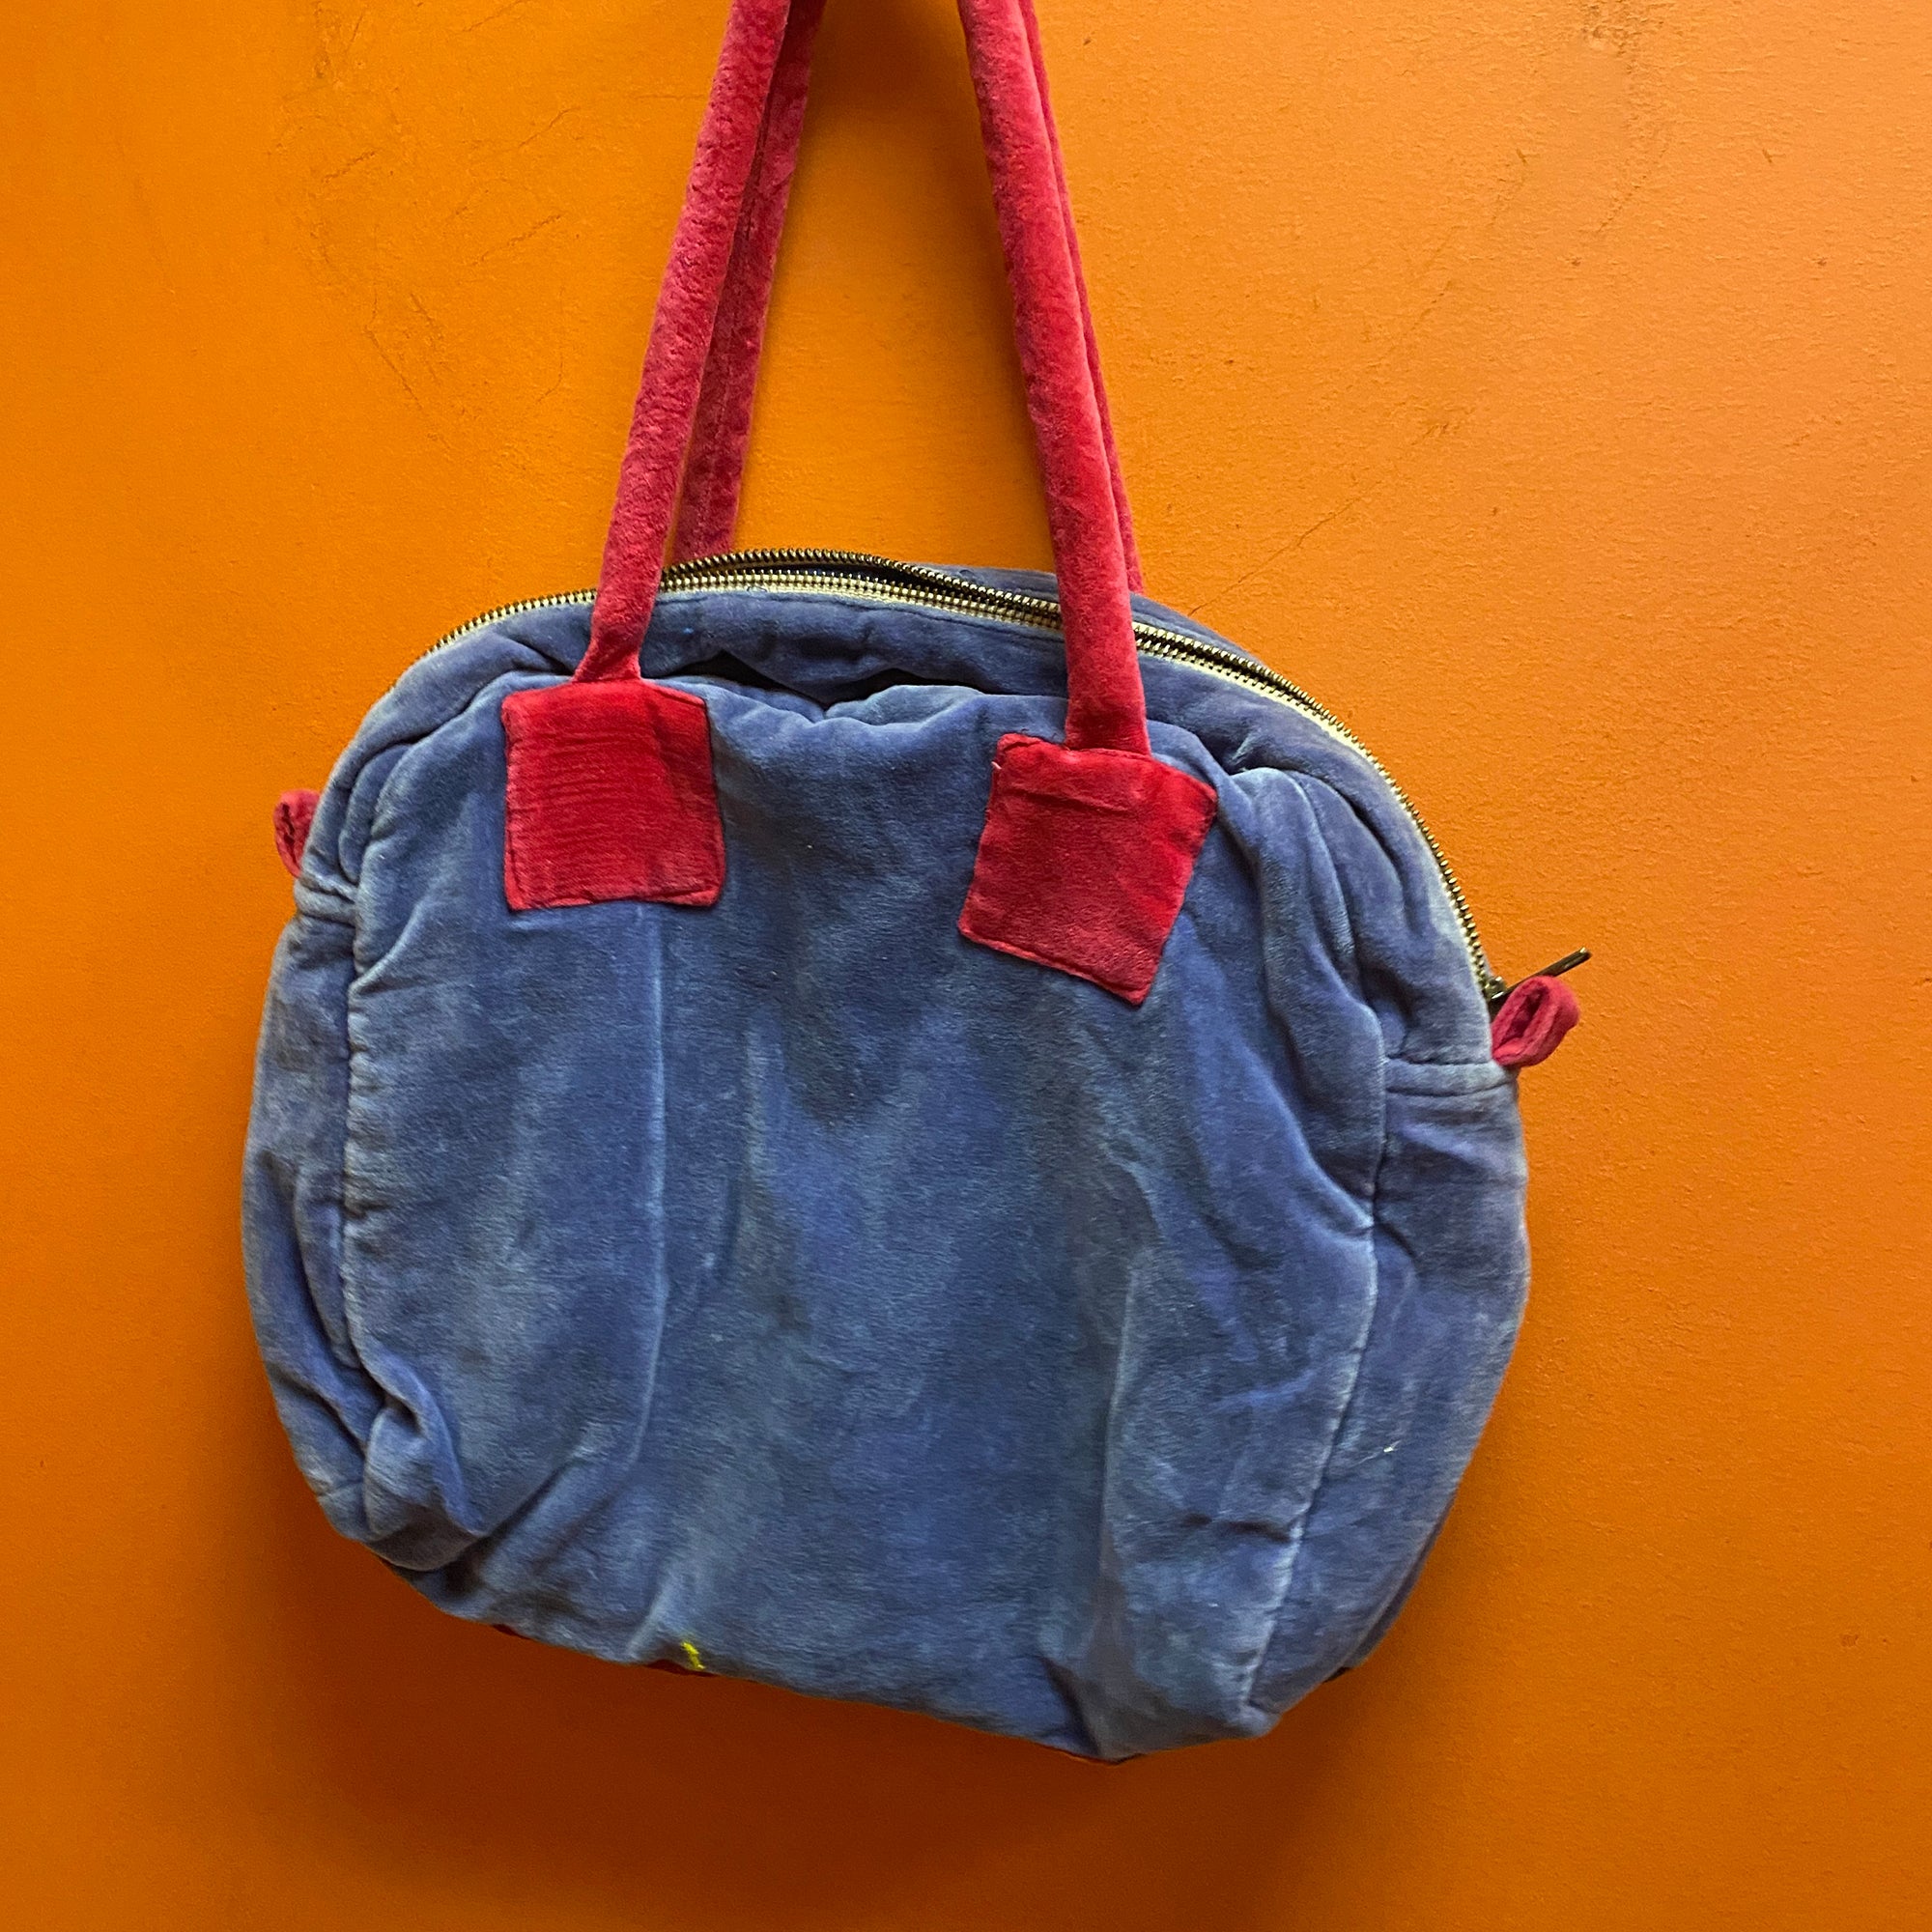 Boho Bags-4 styles - Vintage India NYC